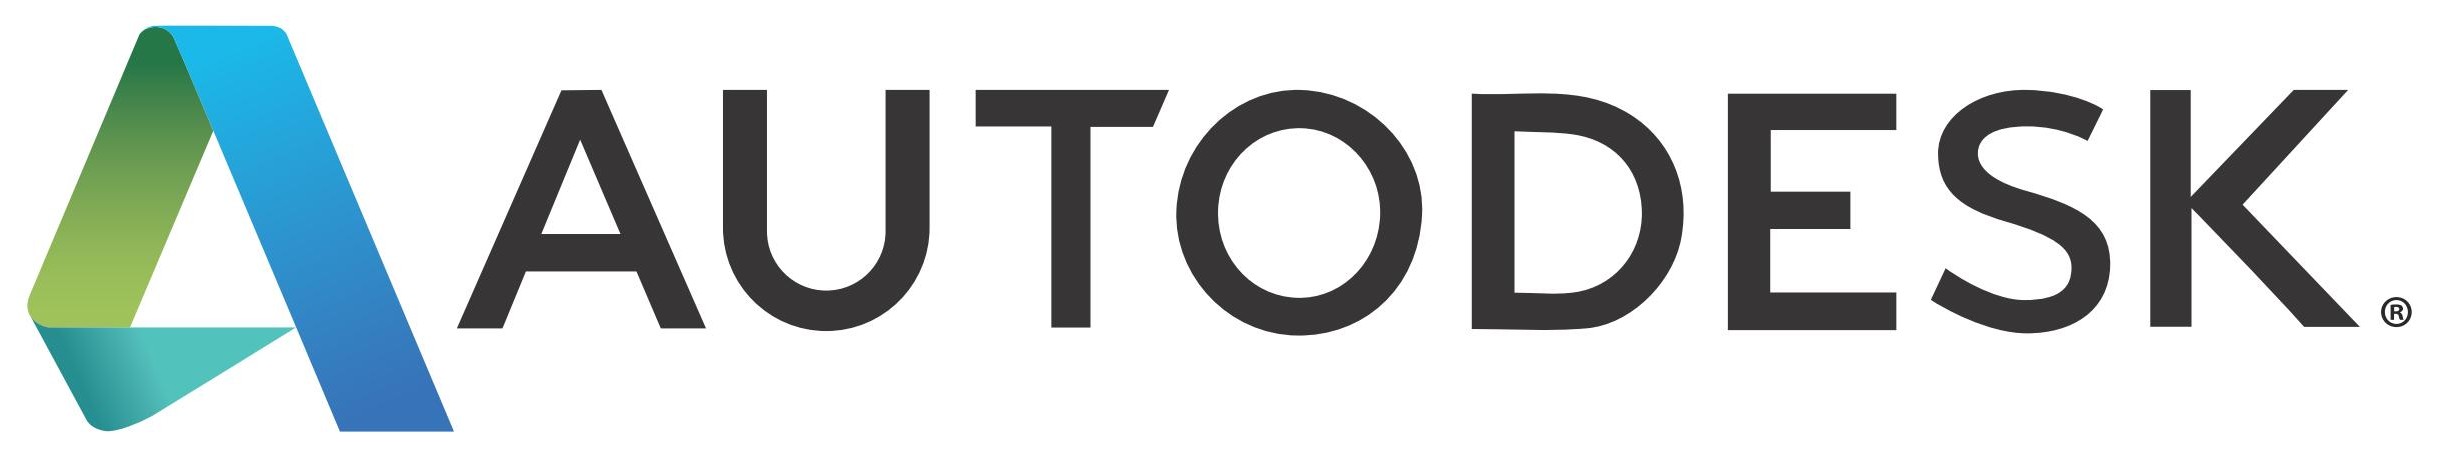 Autodesk Logo - Autodesk Vector, Transparent background PNG HD thumbnail